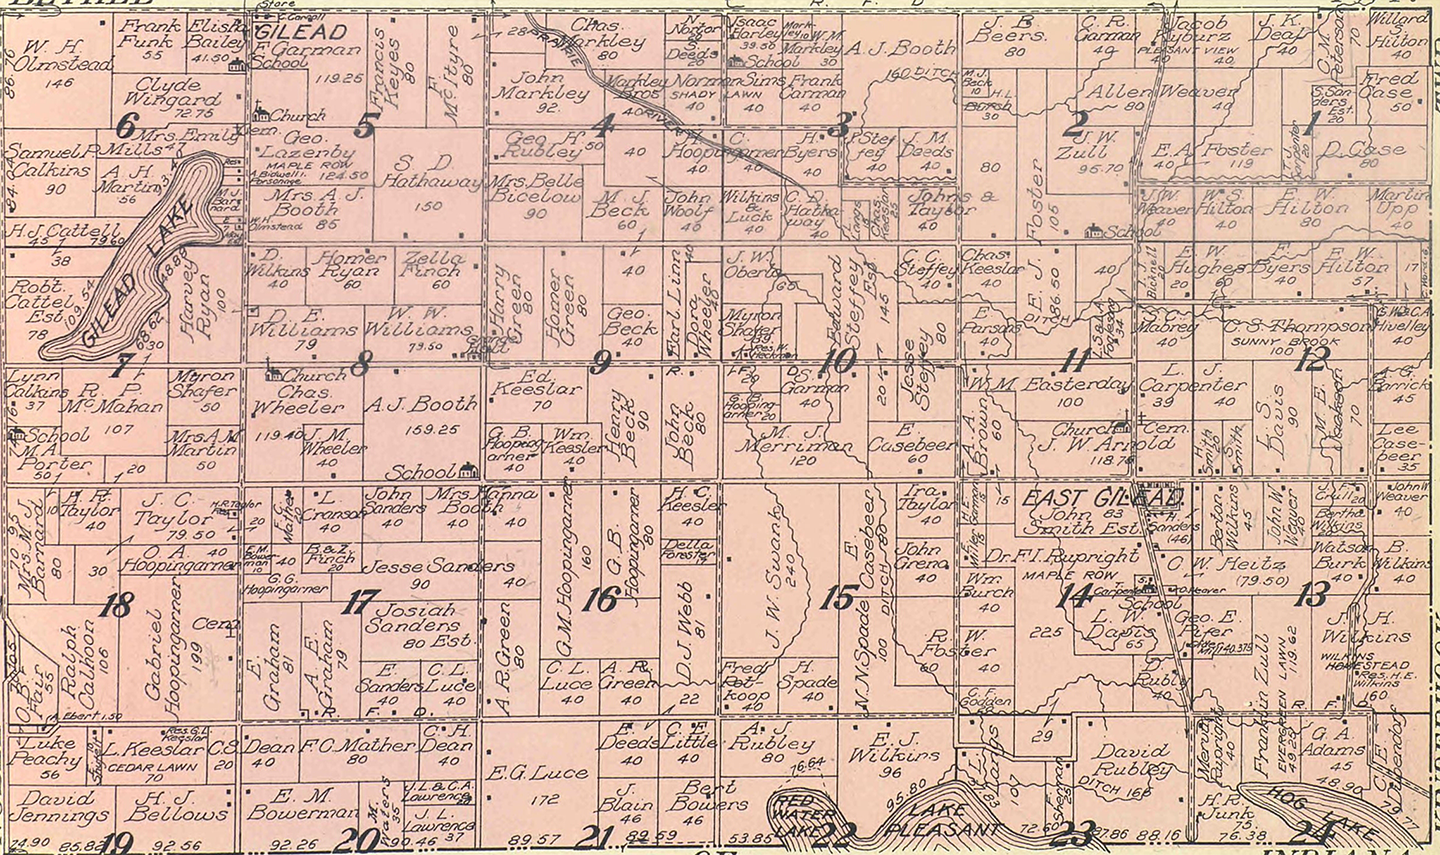 1915 Gilead Township, Michigan landownership map